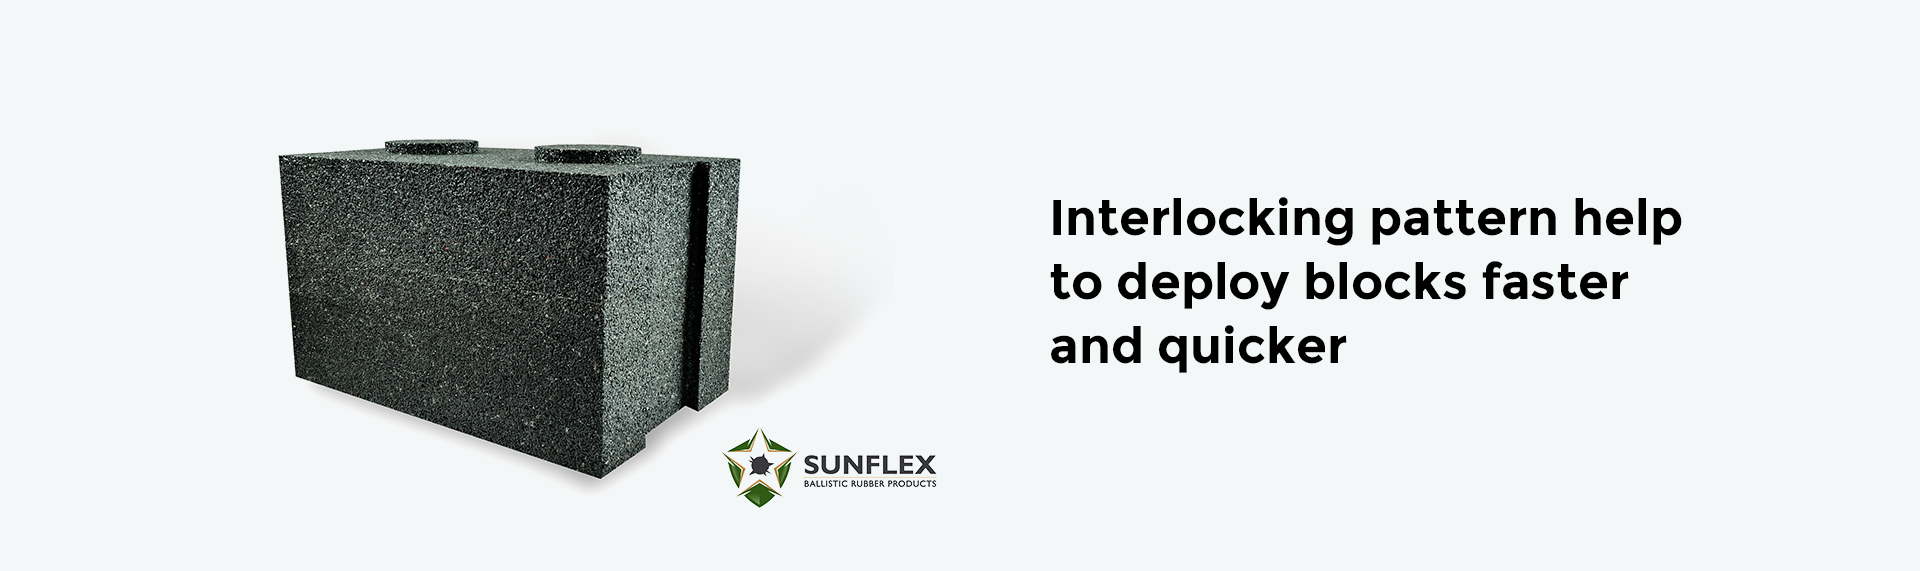 5-Interlocking-pattern-help-to-deploy-blocks-faster-and-quicker